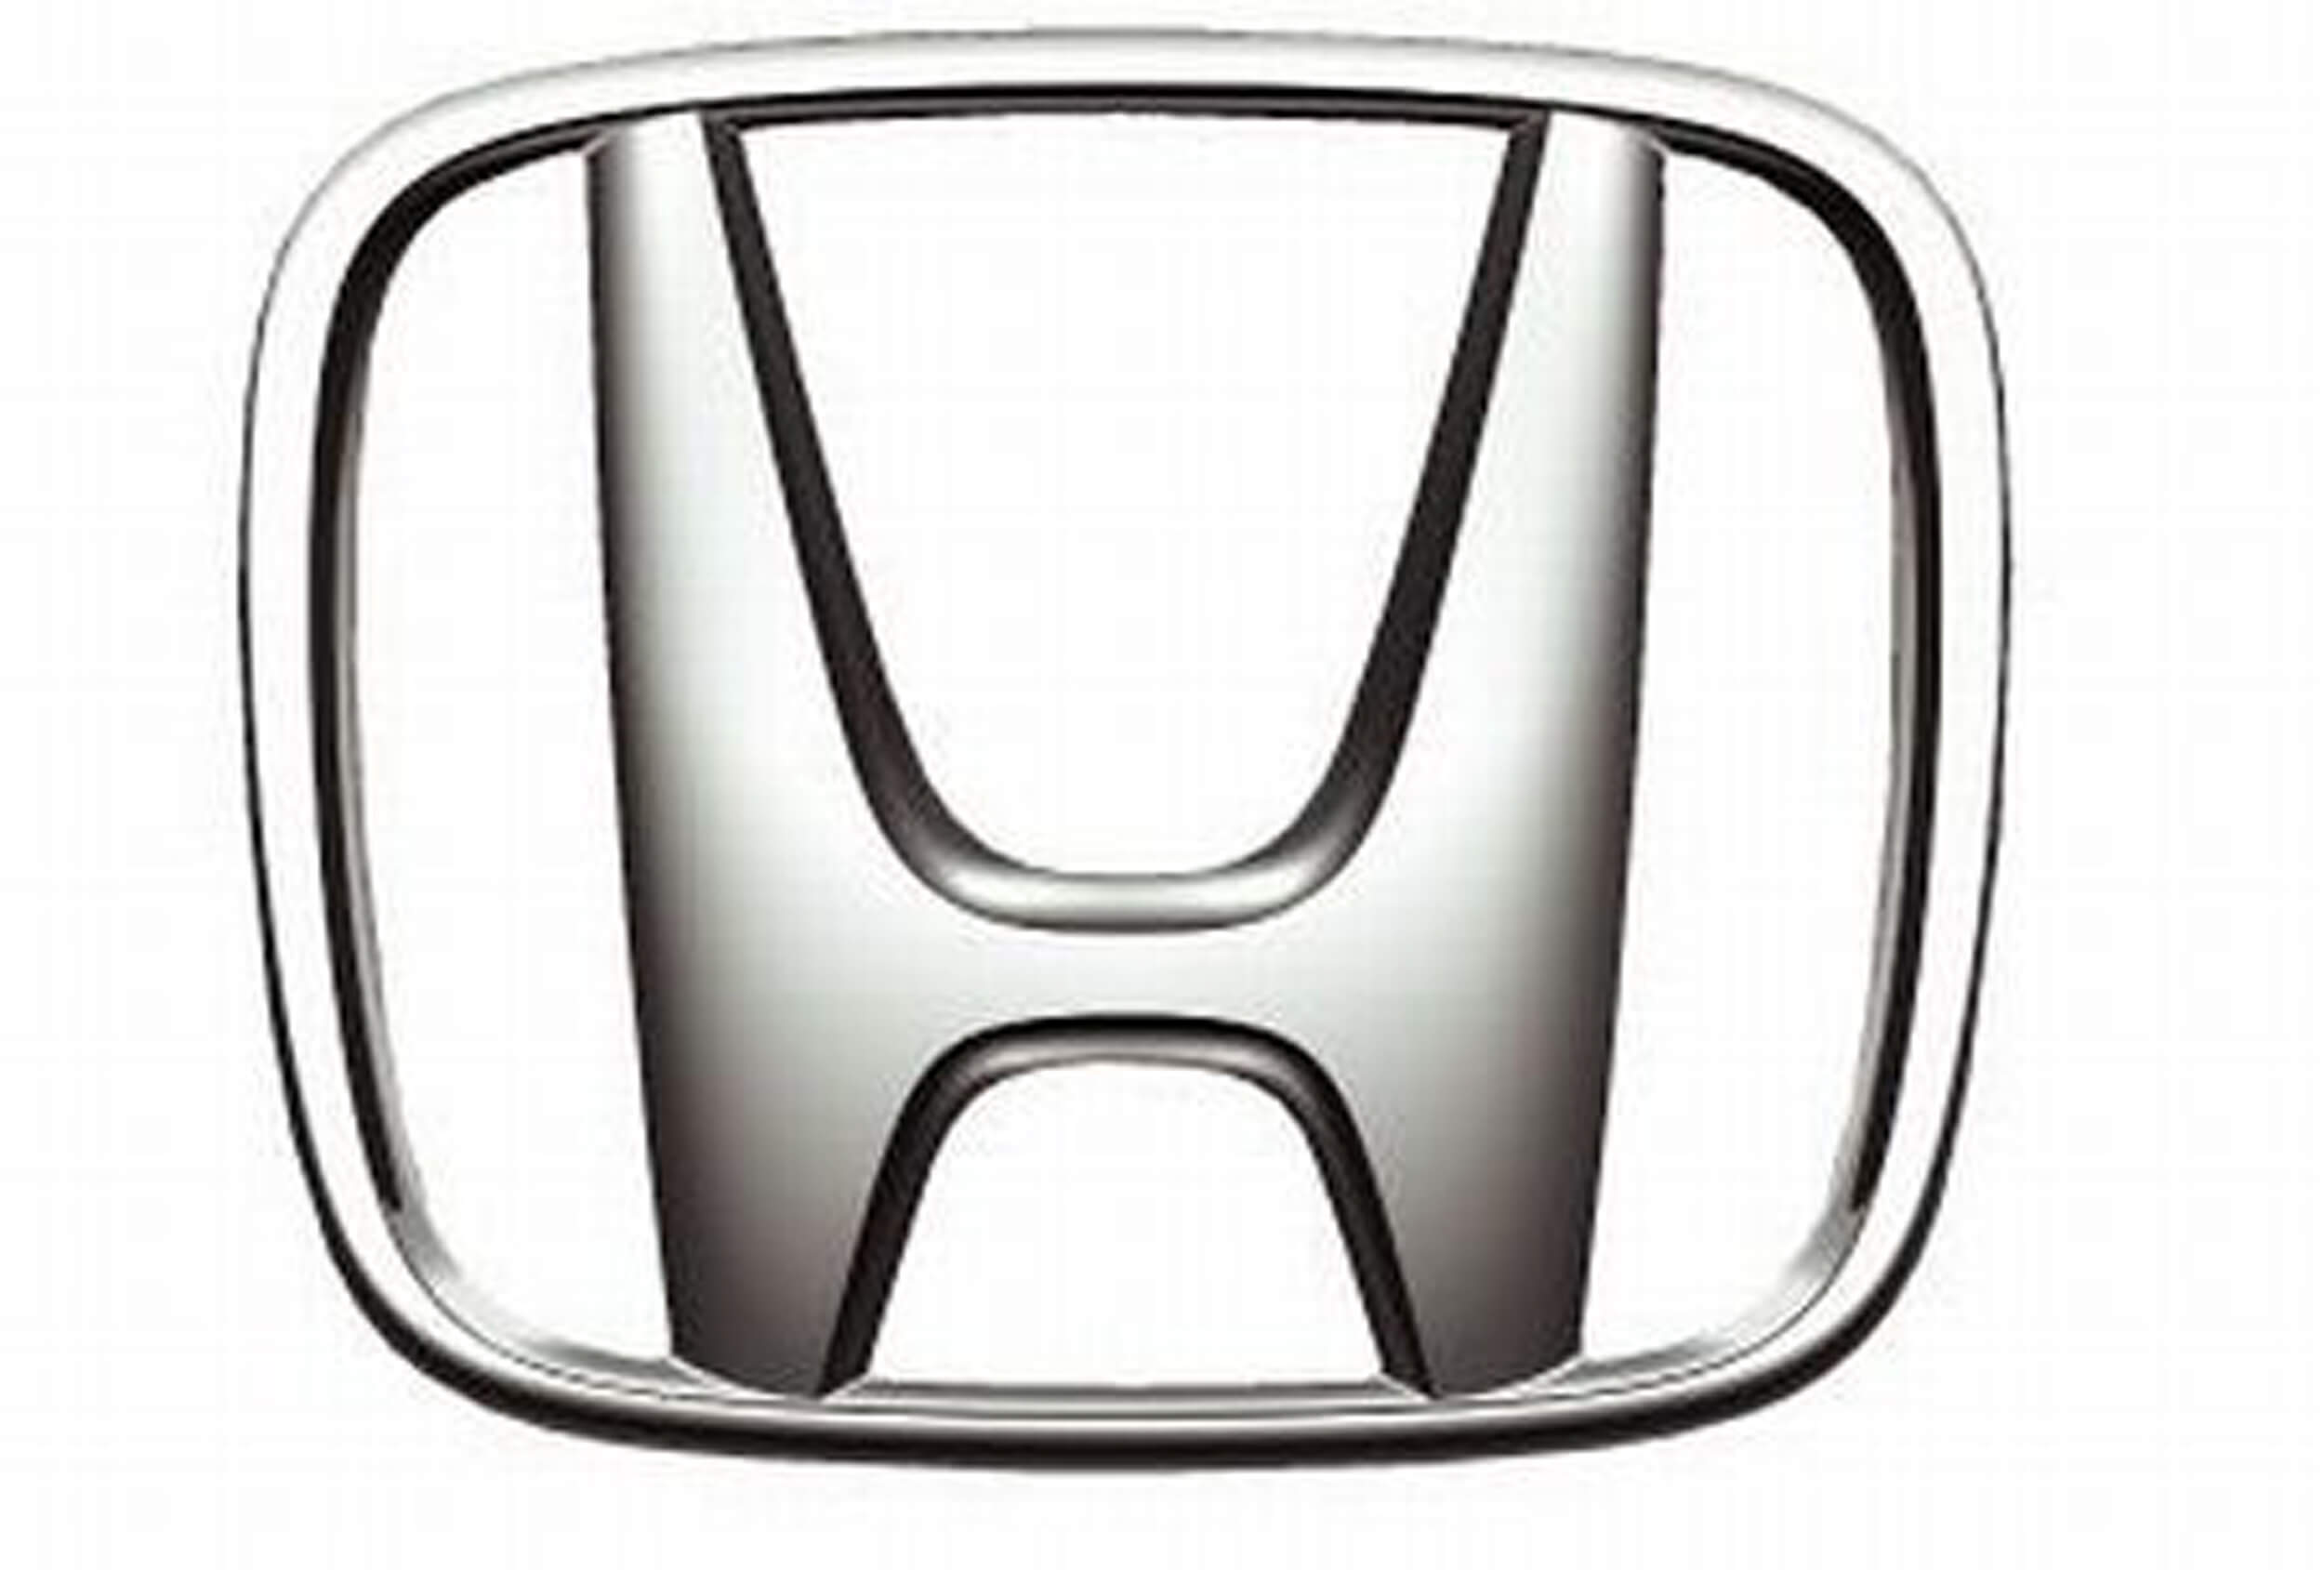 Honda auto parts wholesaler (Copy) (Copy)